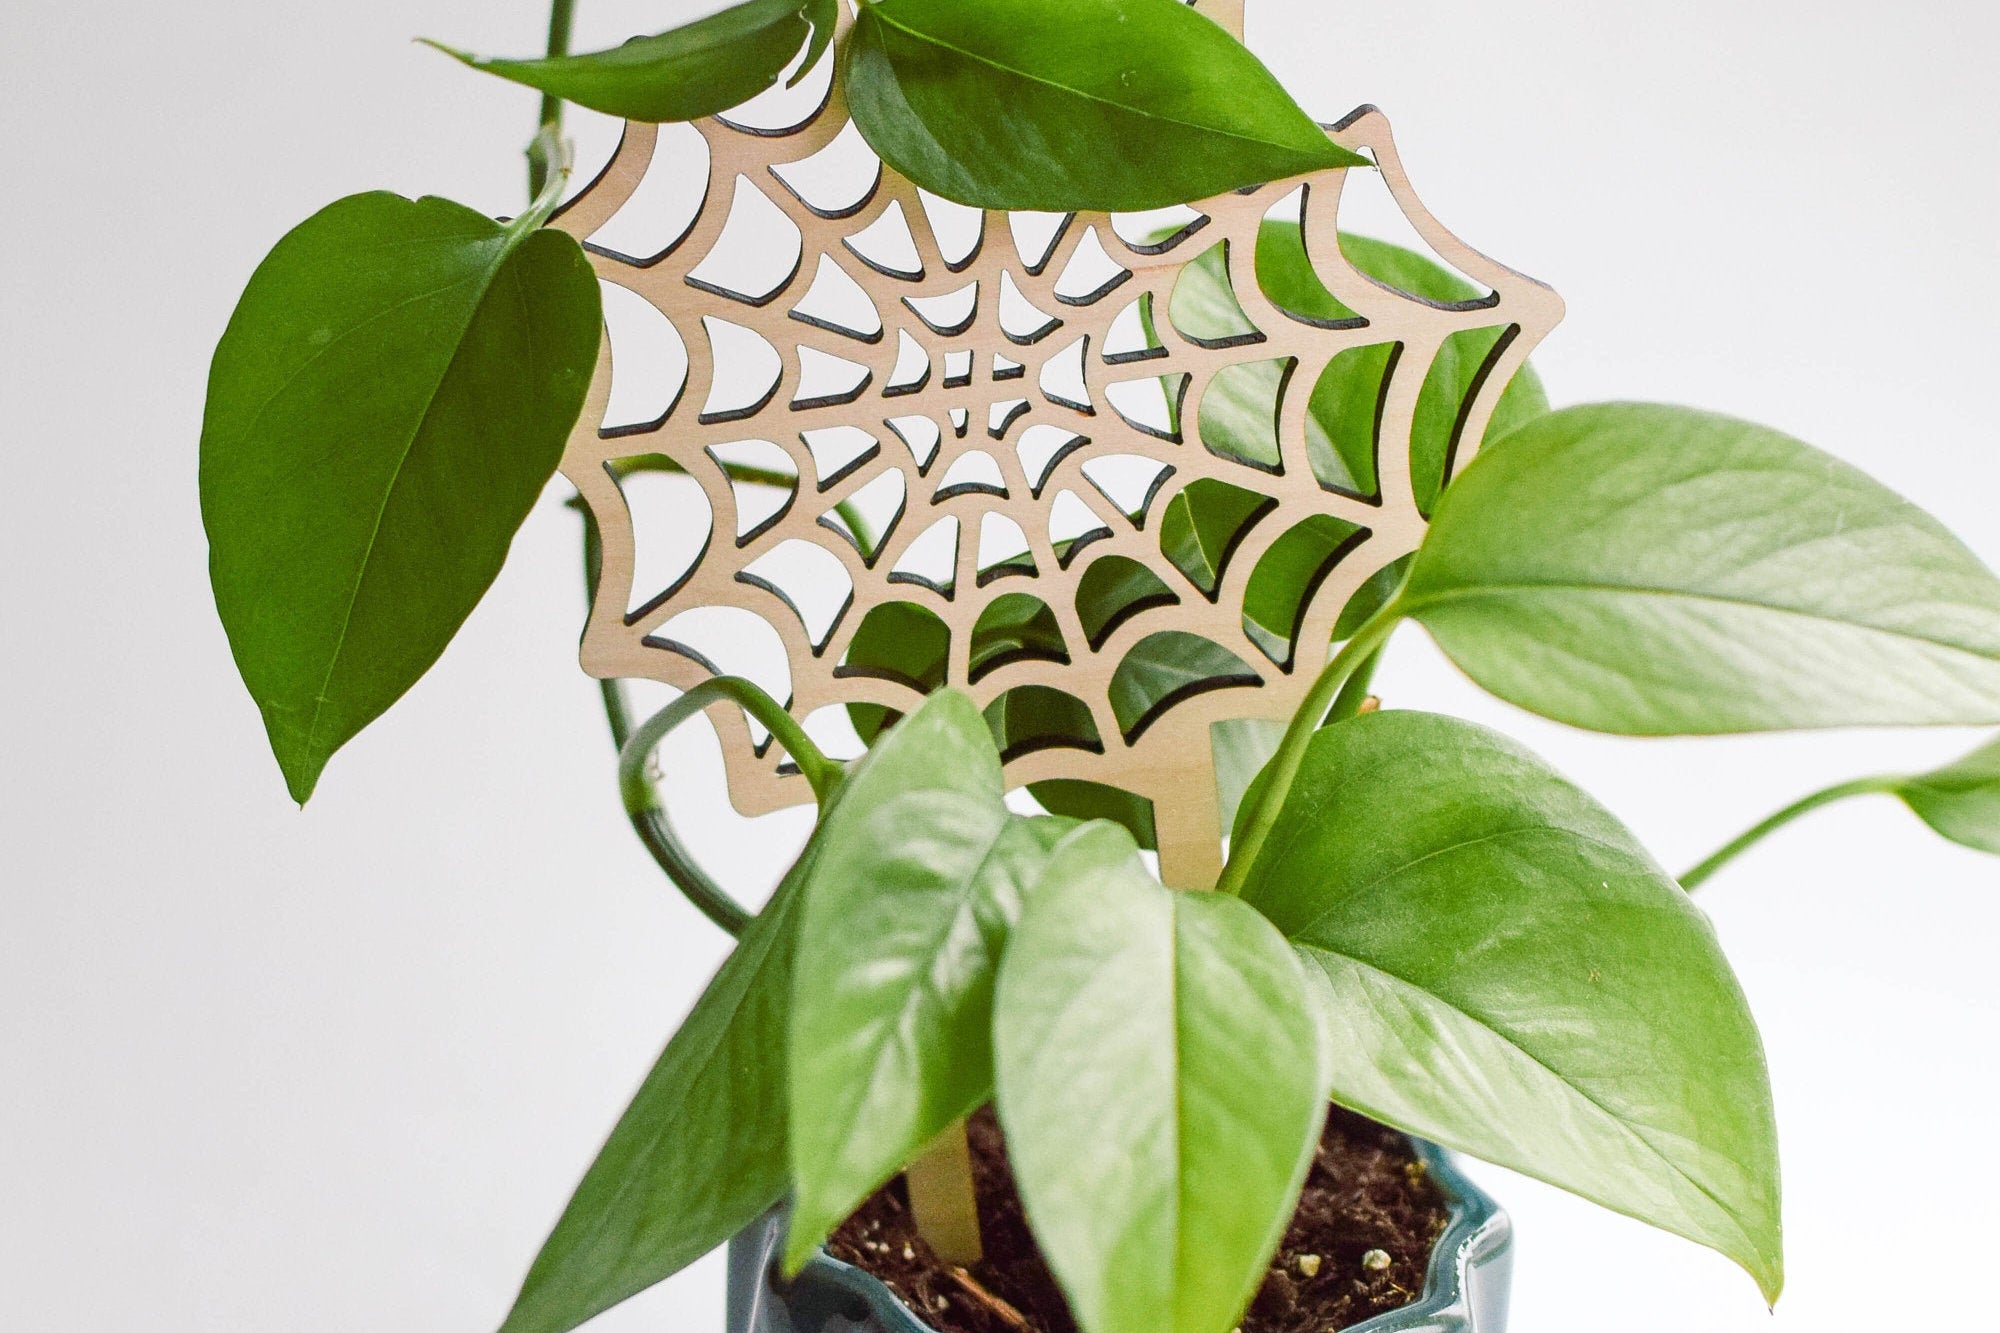 spiderweb indoor trellis for potted plants